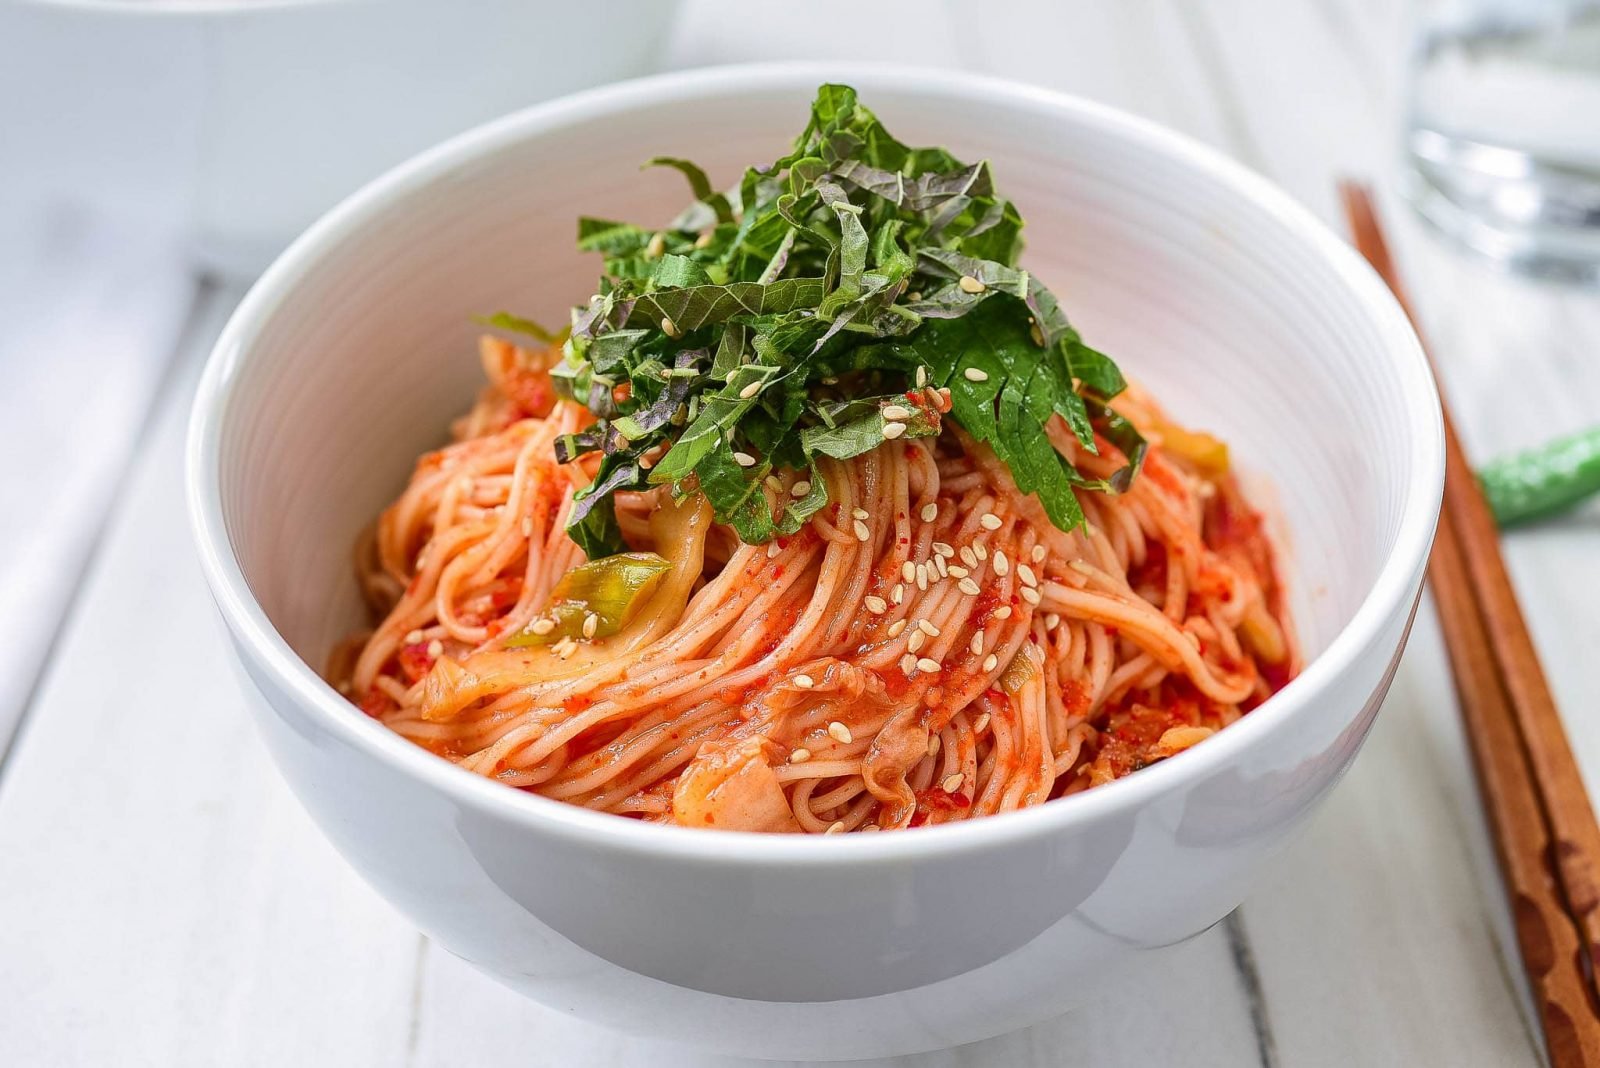 DSC 4646 3 3 e1615133706454 - Kimchi Bibim Guksu (Spicy Cold Noodles with Kimchi)